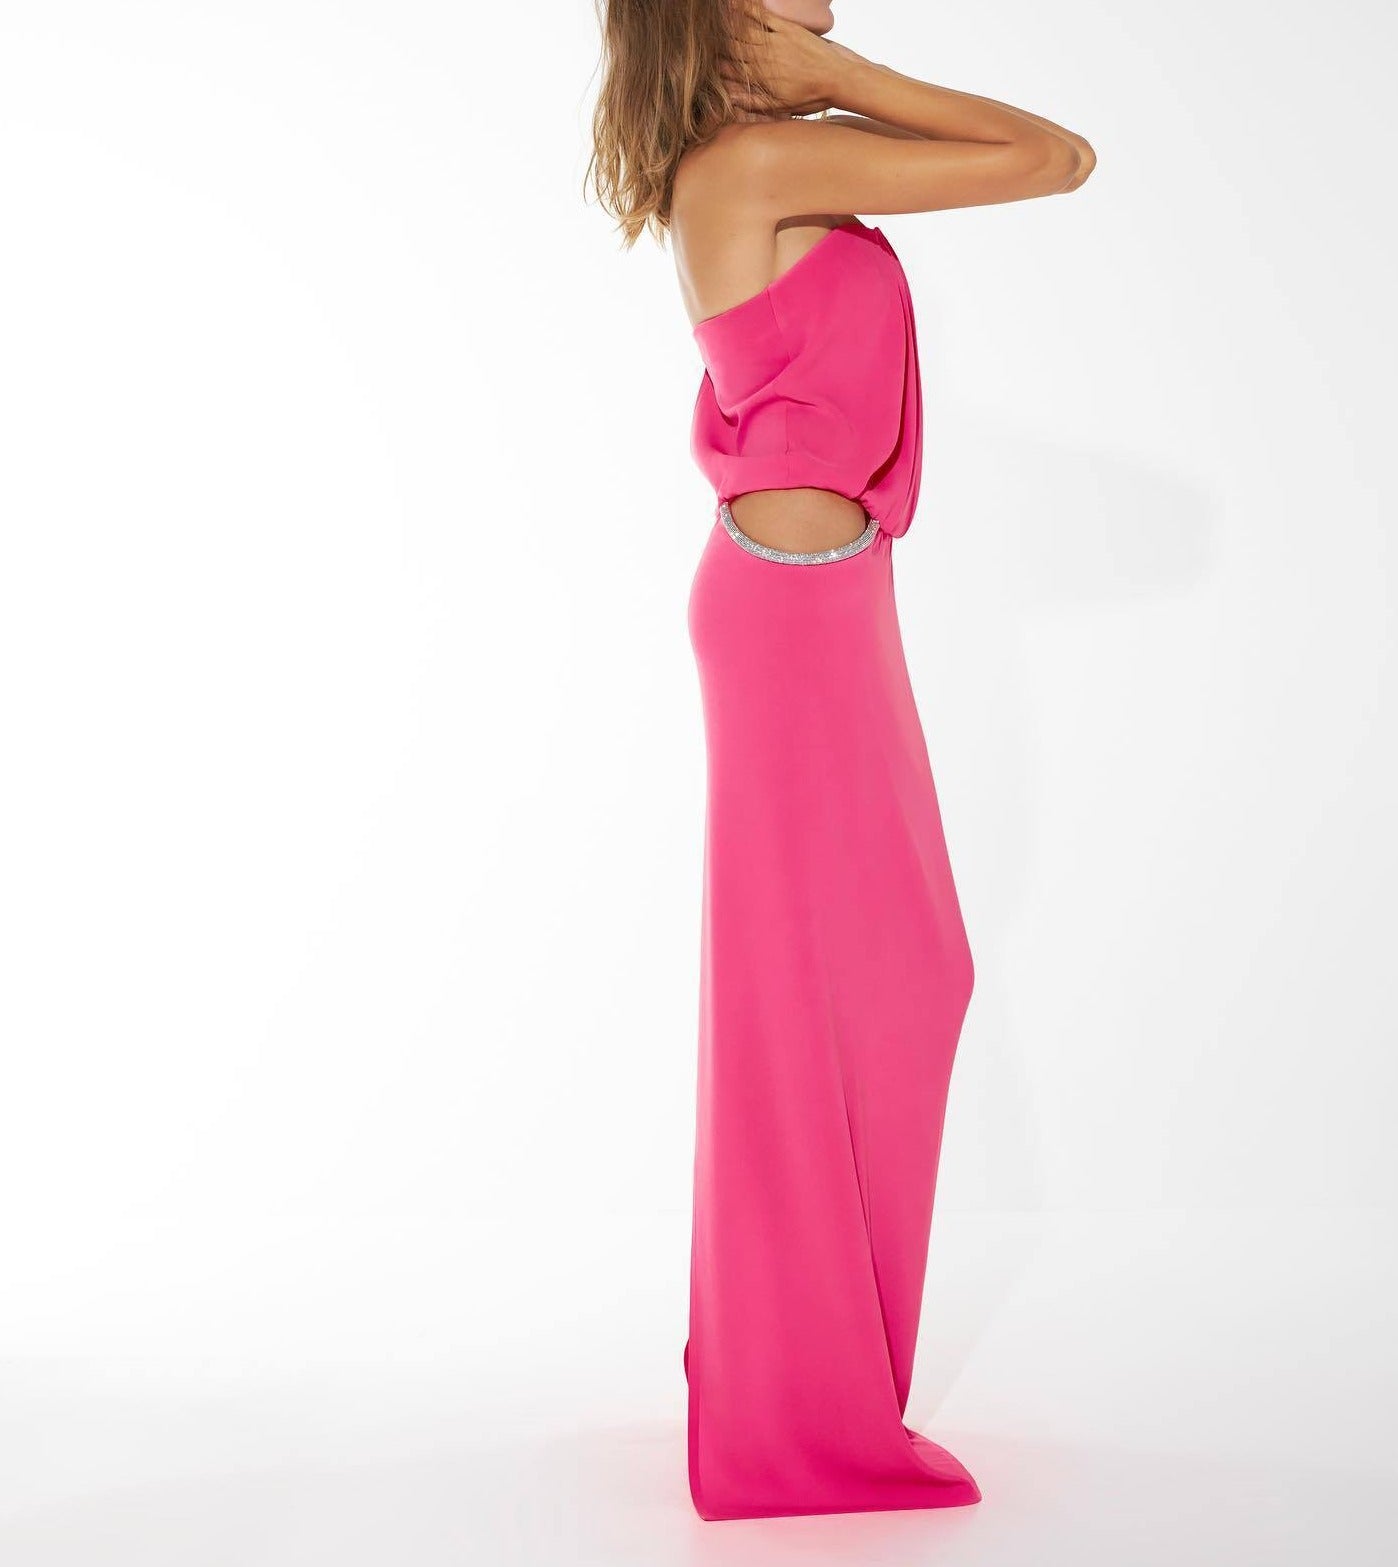 Emerie Strapless Cutout Tube Dress - Hot fashionista